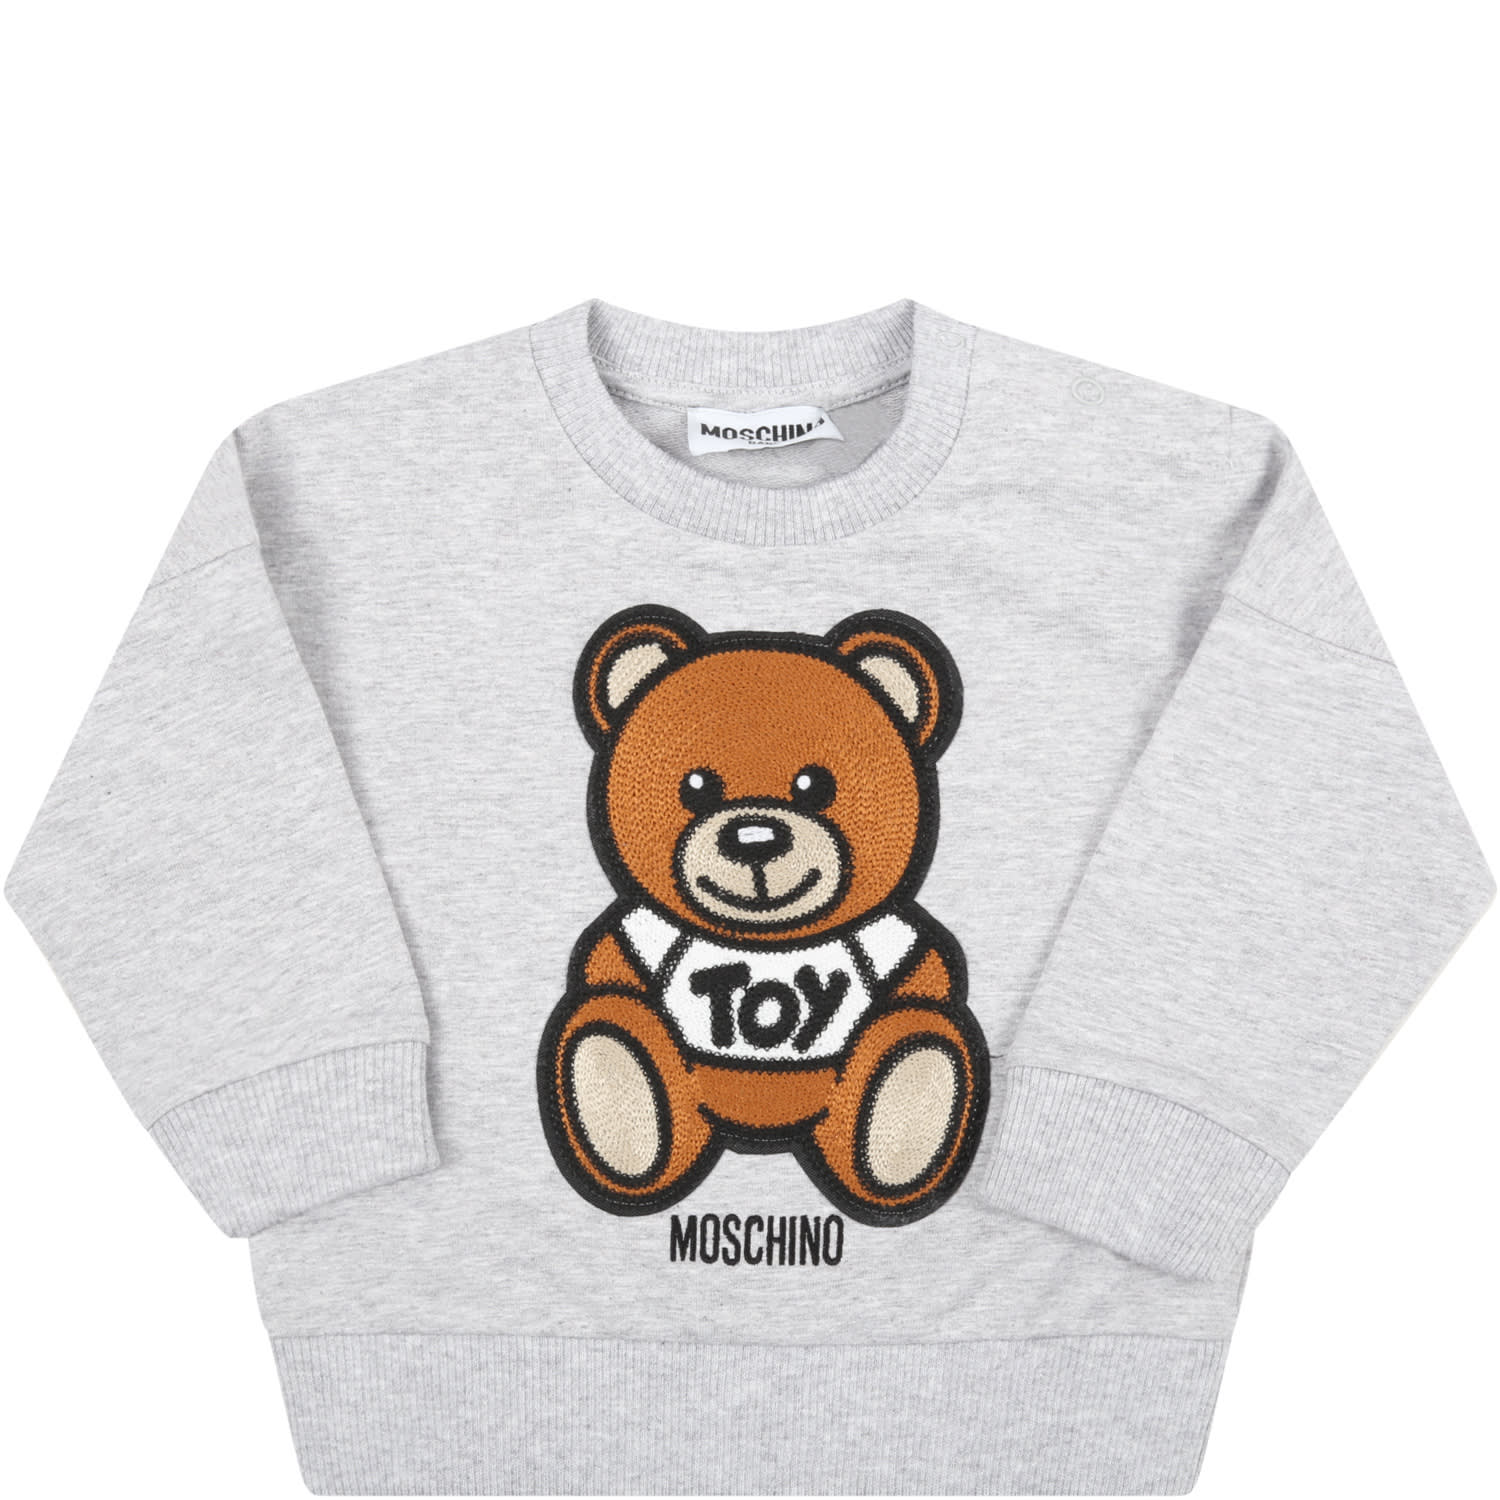 Moschino Grey Sweatshirt For Babykids With Teddy Bear